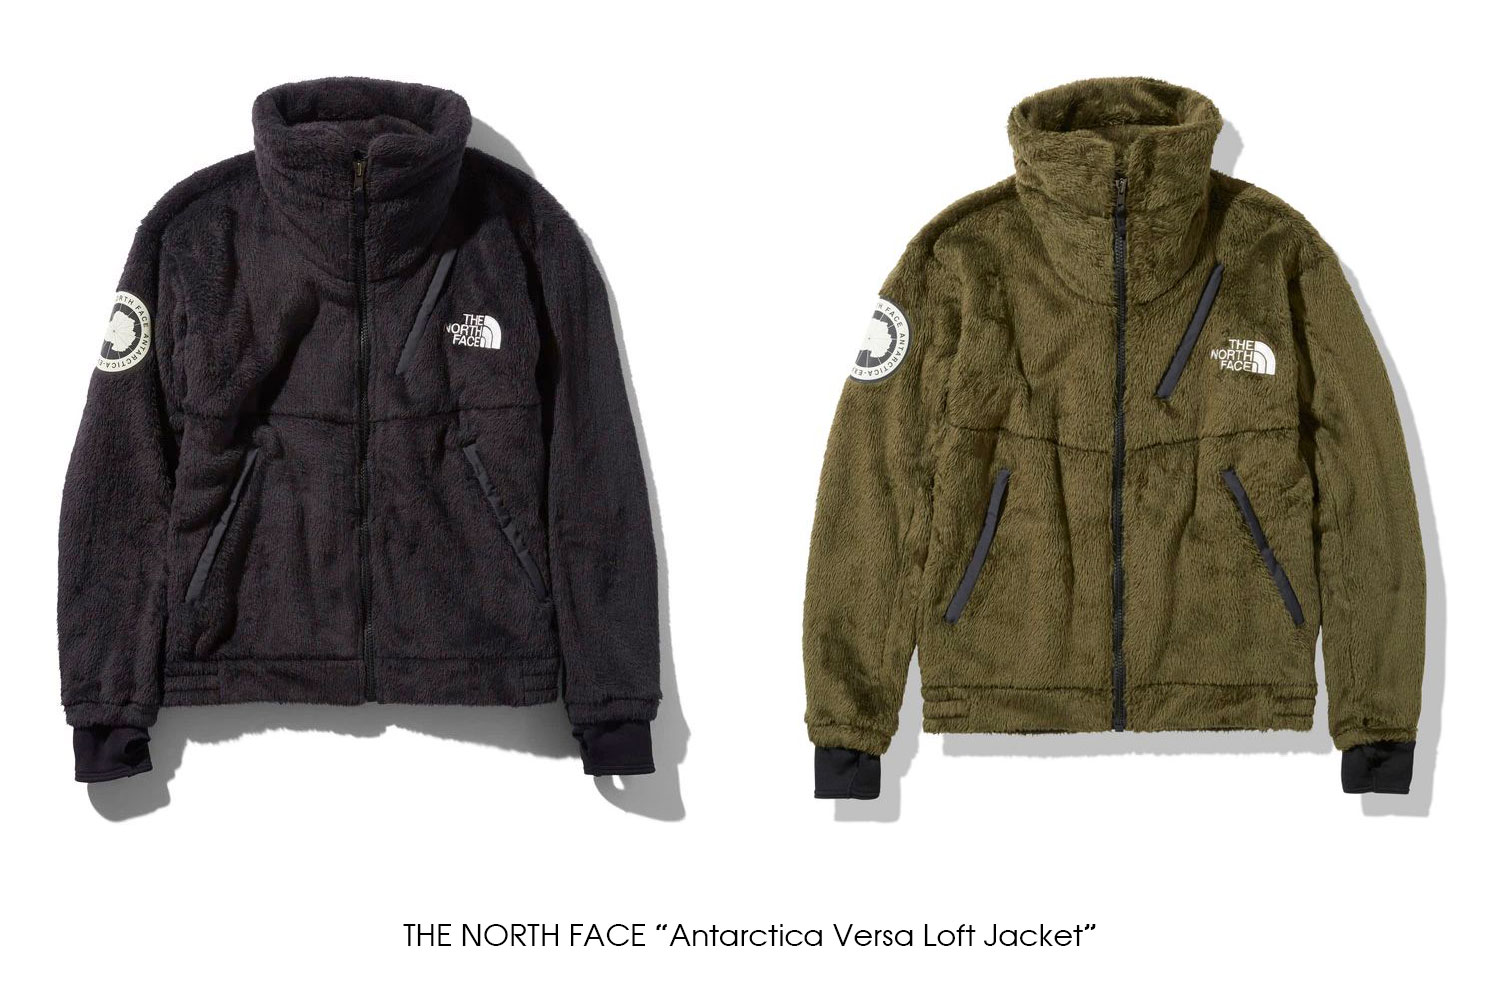 THE NORTH FACE "Antarctica Versa Loft Jacket"